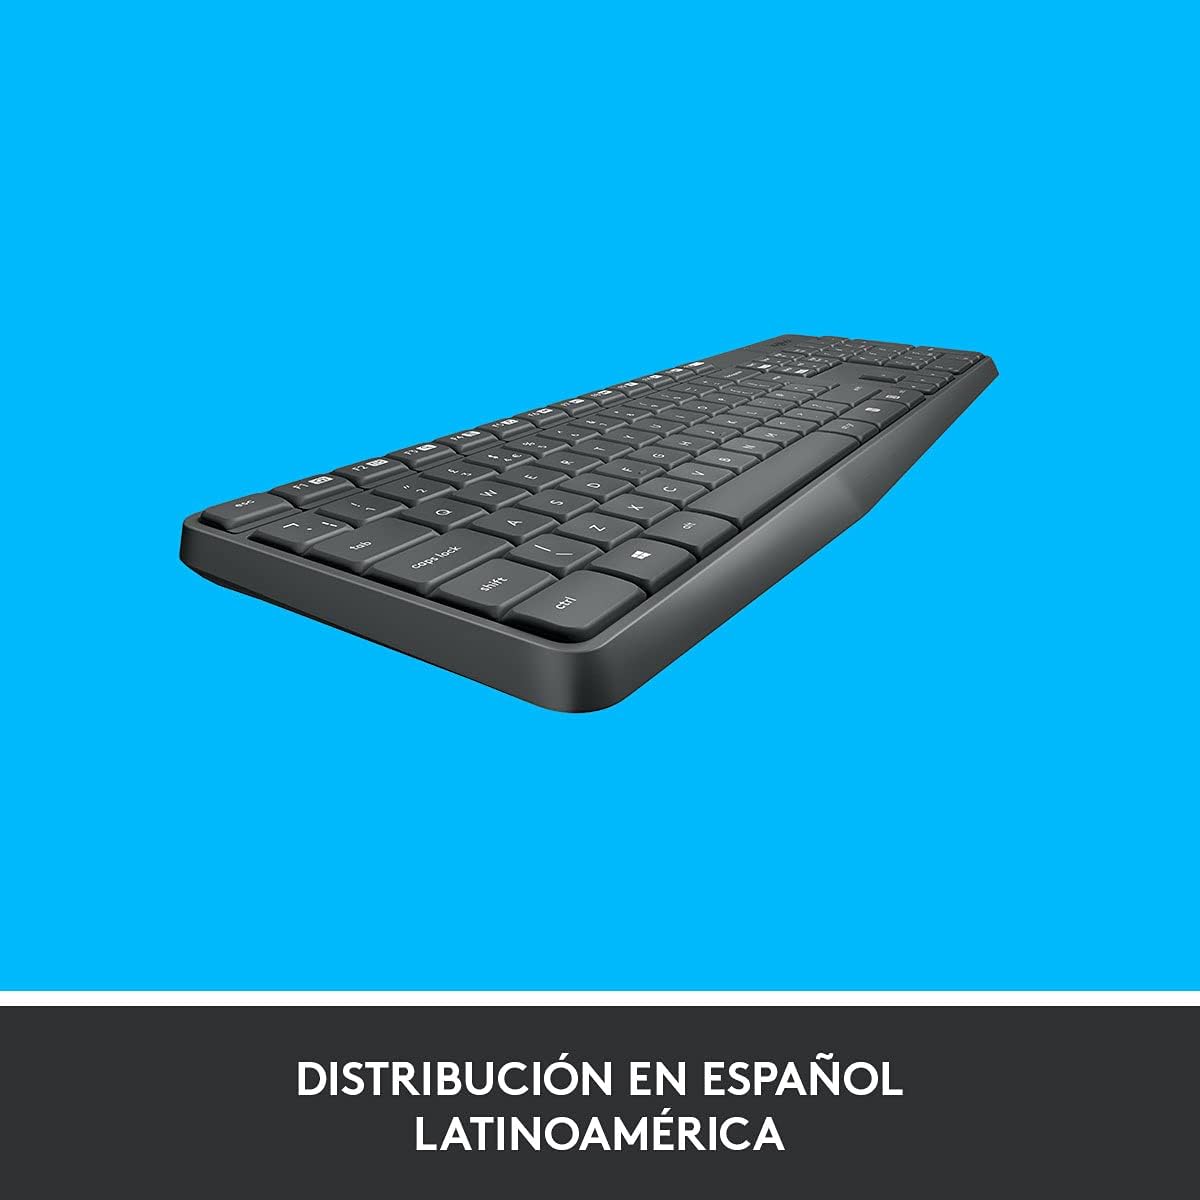 Combo Teclado y Mouse Logitech MK235, Inalámbrico, español, negro